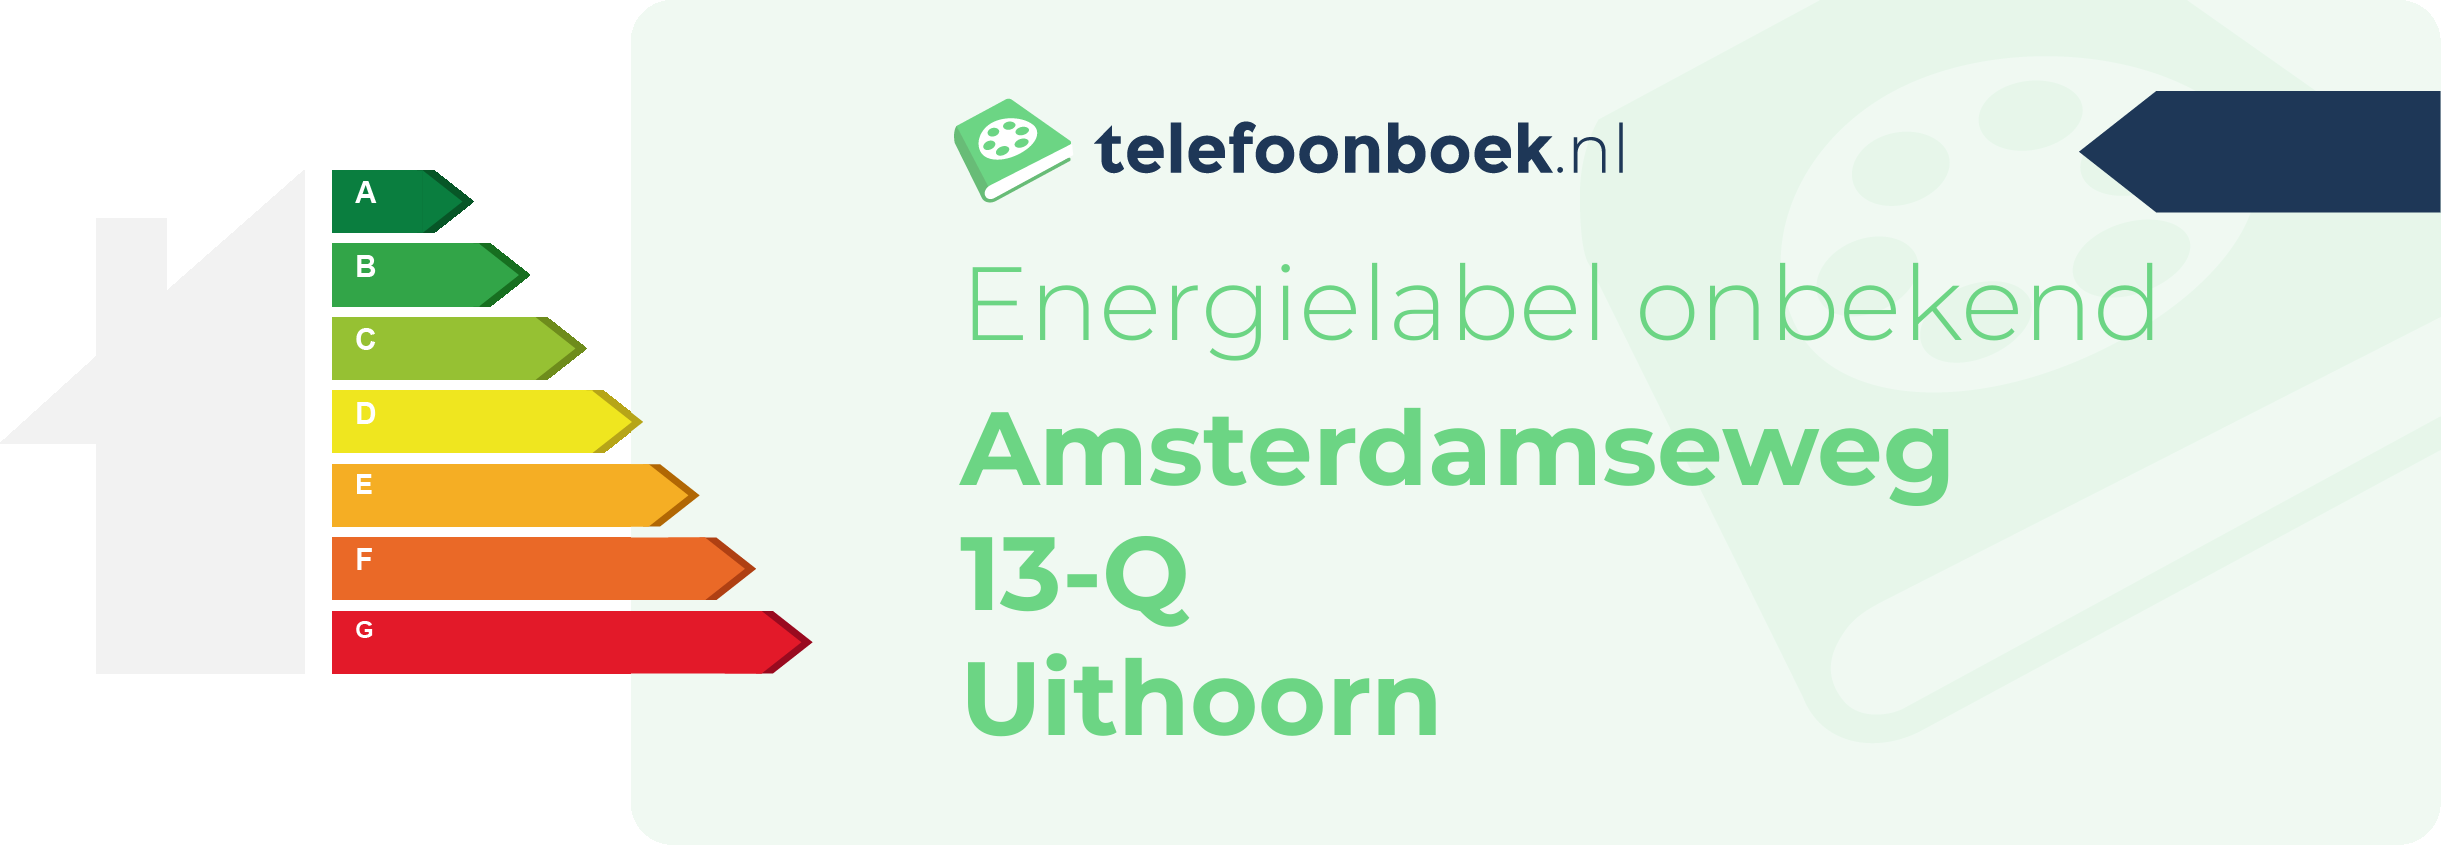 Energielabel Amsterdamseweg 13-Q Uithoorn